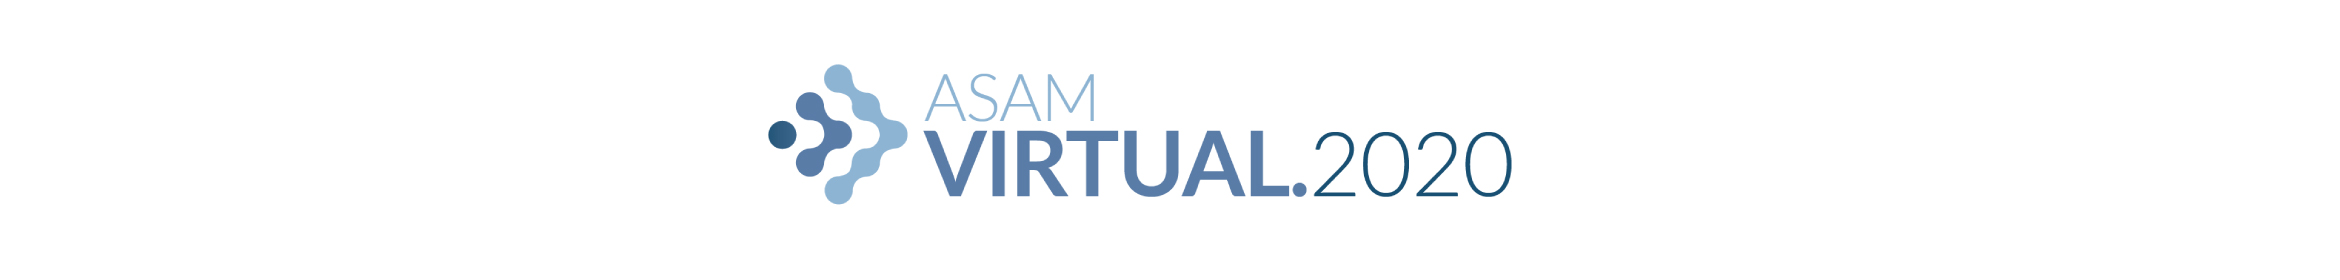 ASAM Virtual 2020 Main banner